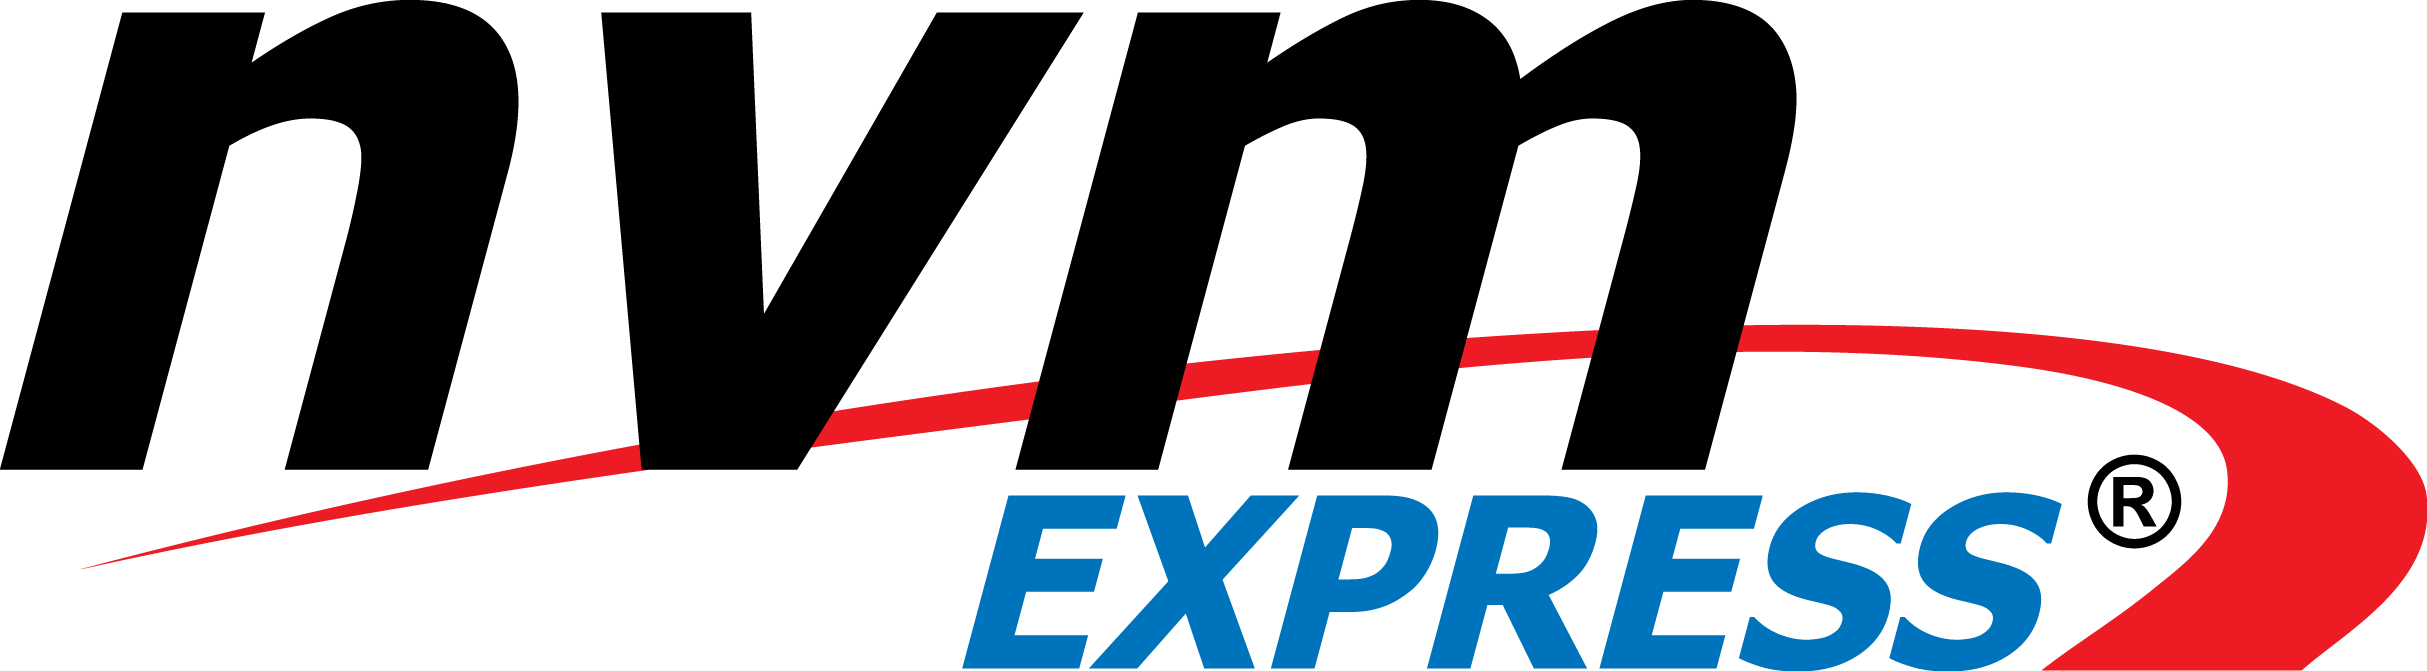 Express. NVME логотип. НВМ экспресс. NVM Express logo. NVME SSD logo.